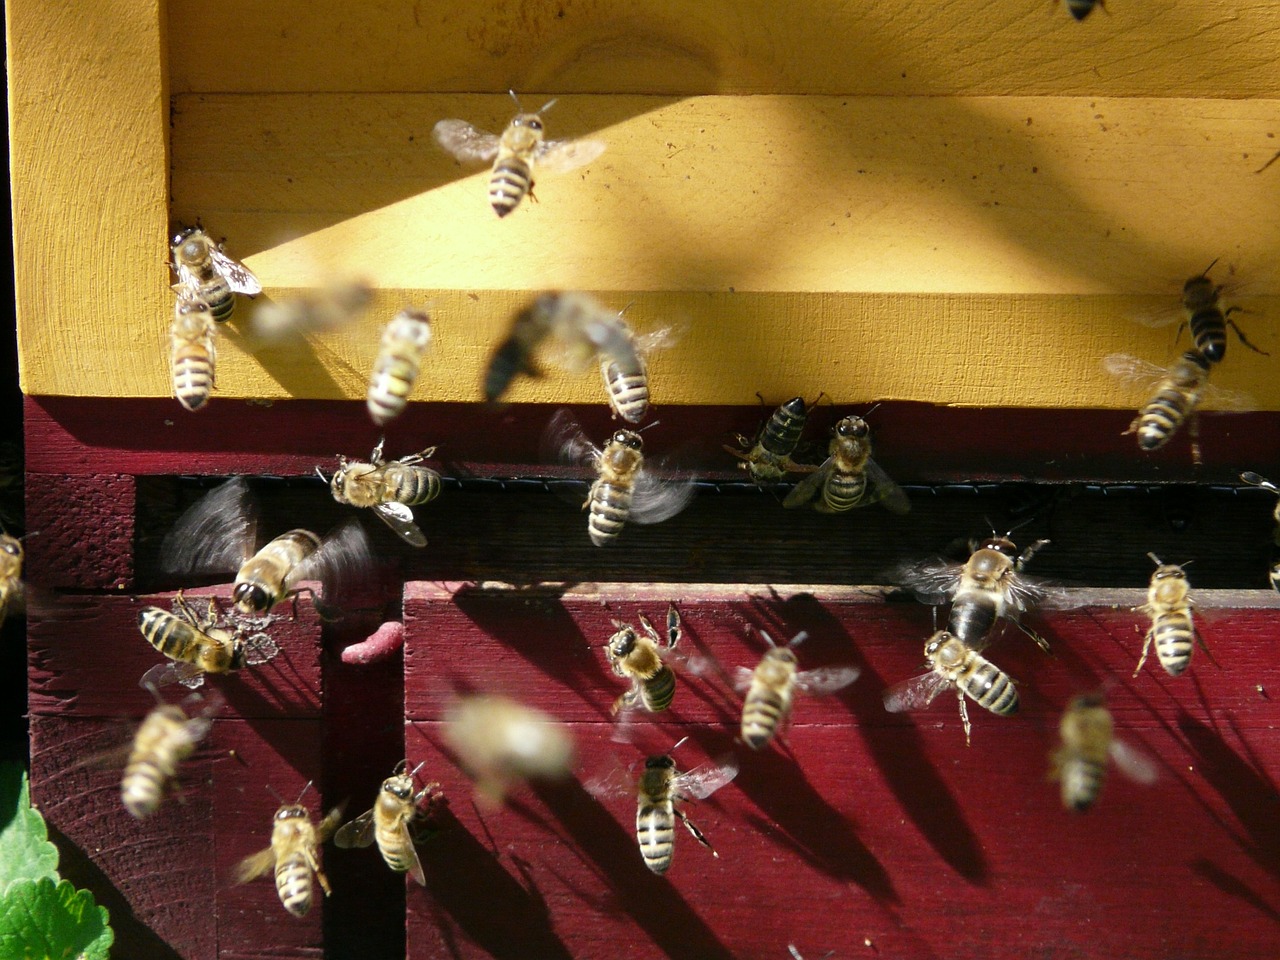 Medus Bitės, Bičių, Avilys, Medus, Skristi, Hum, Vasara, Skrydžio Vabzdys, Vabzdys, Bitininkystė